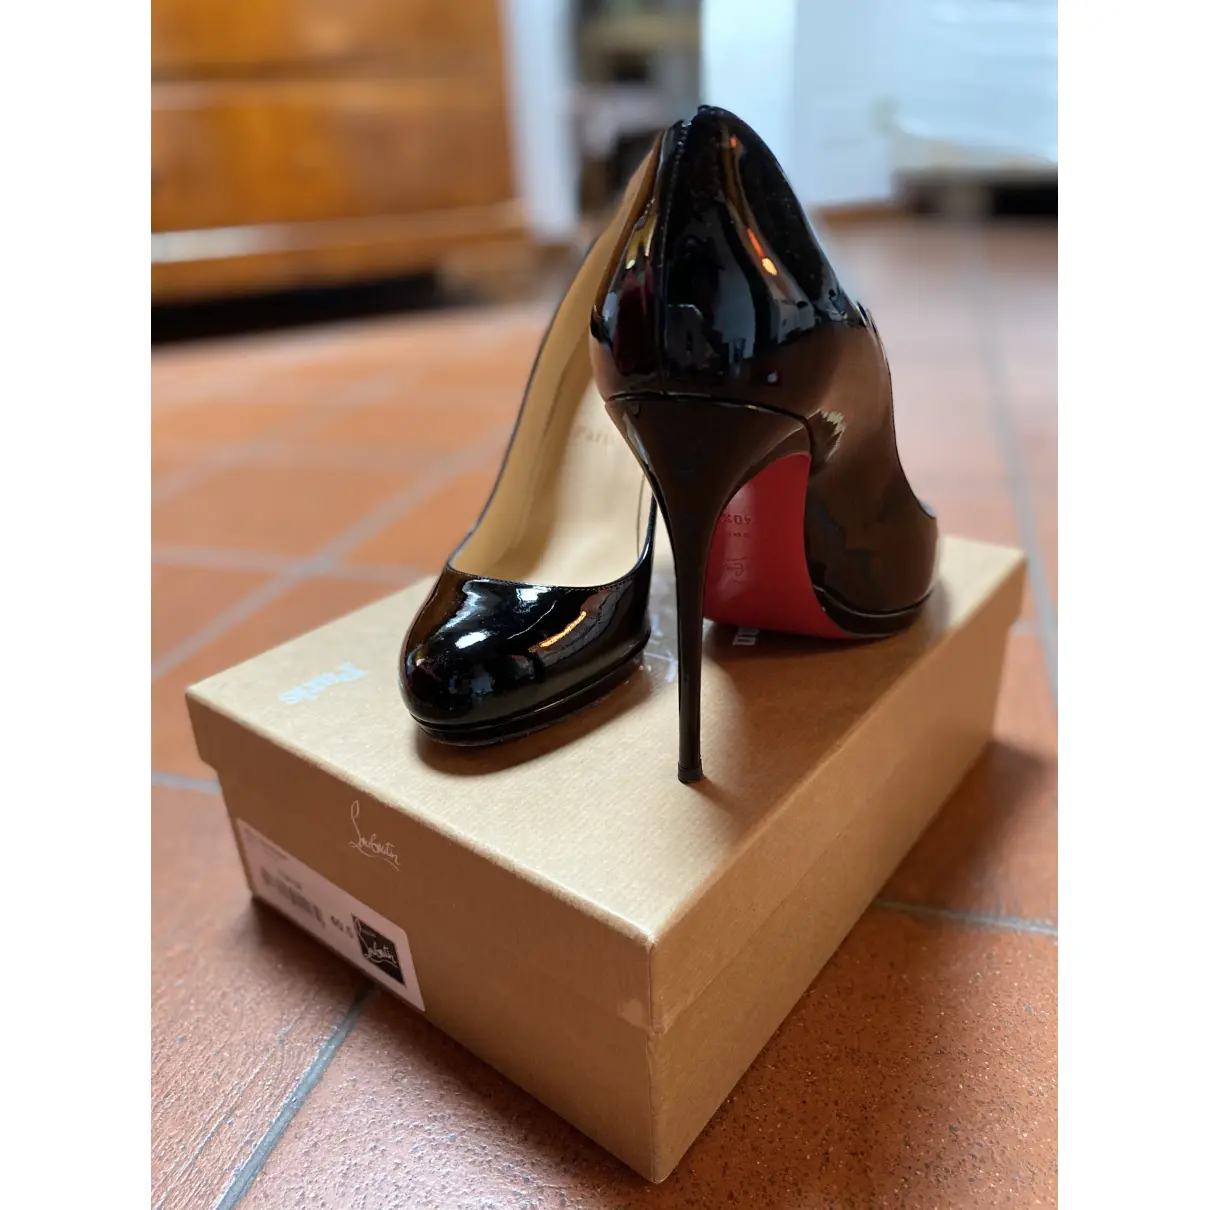 Buy Christian Louboutin Fifi  leather heels online